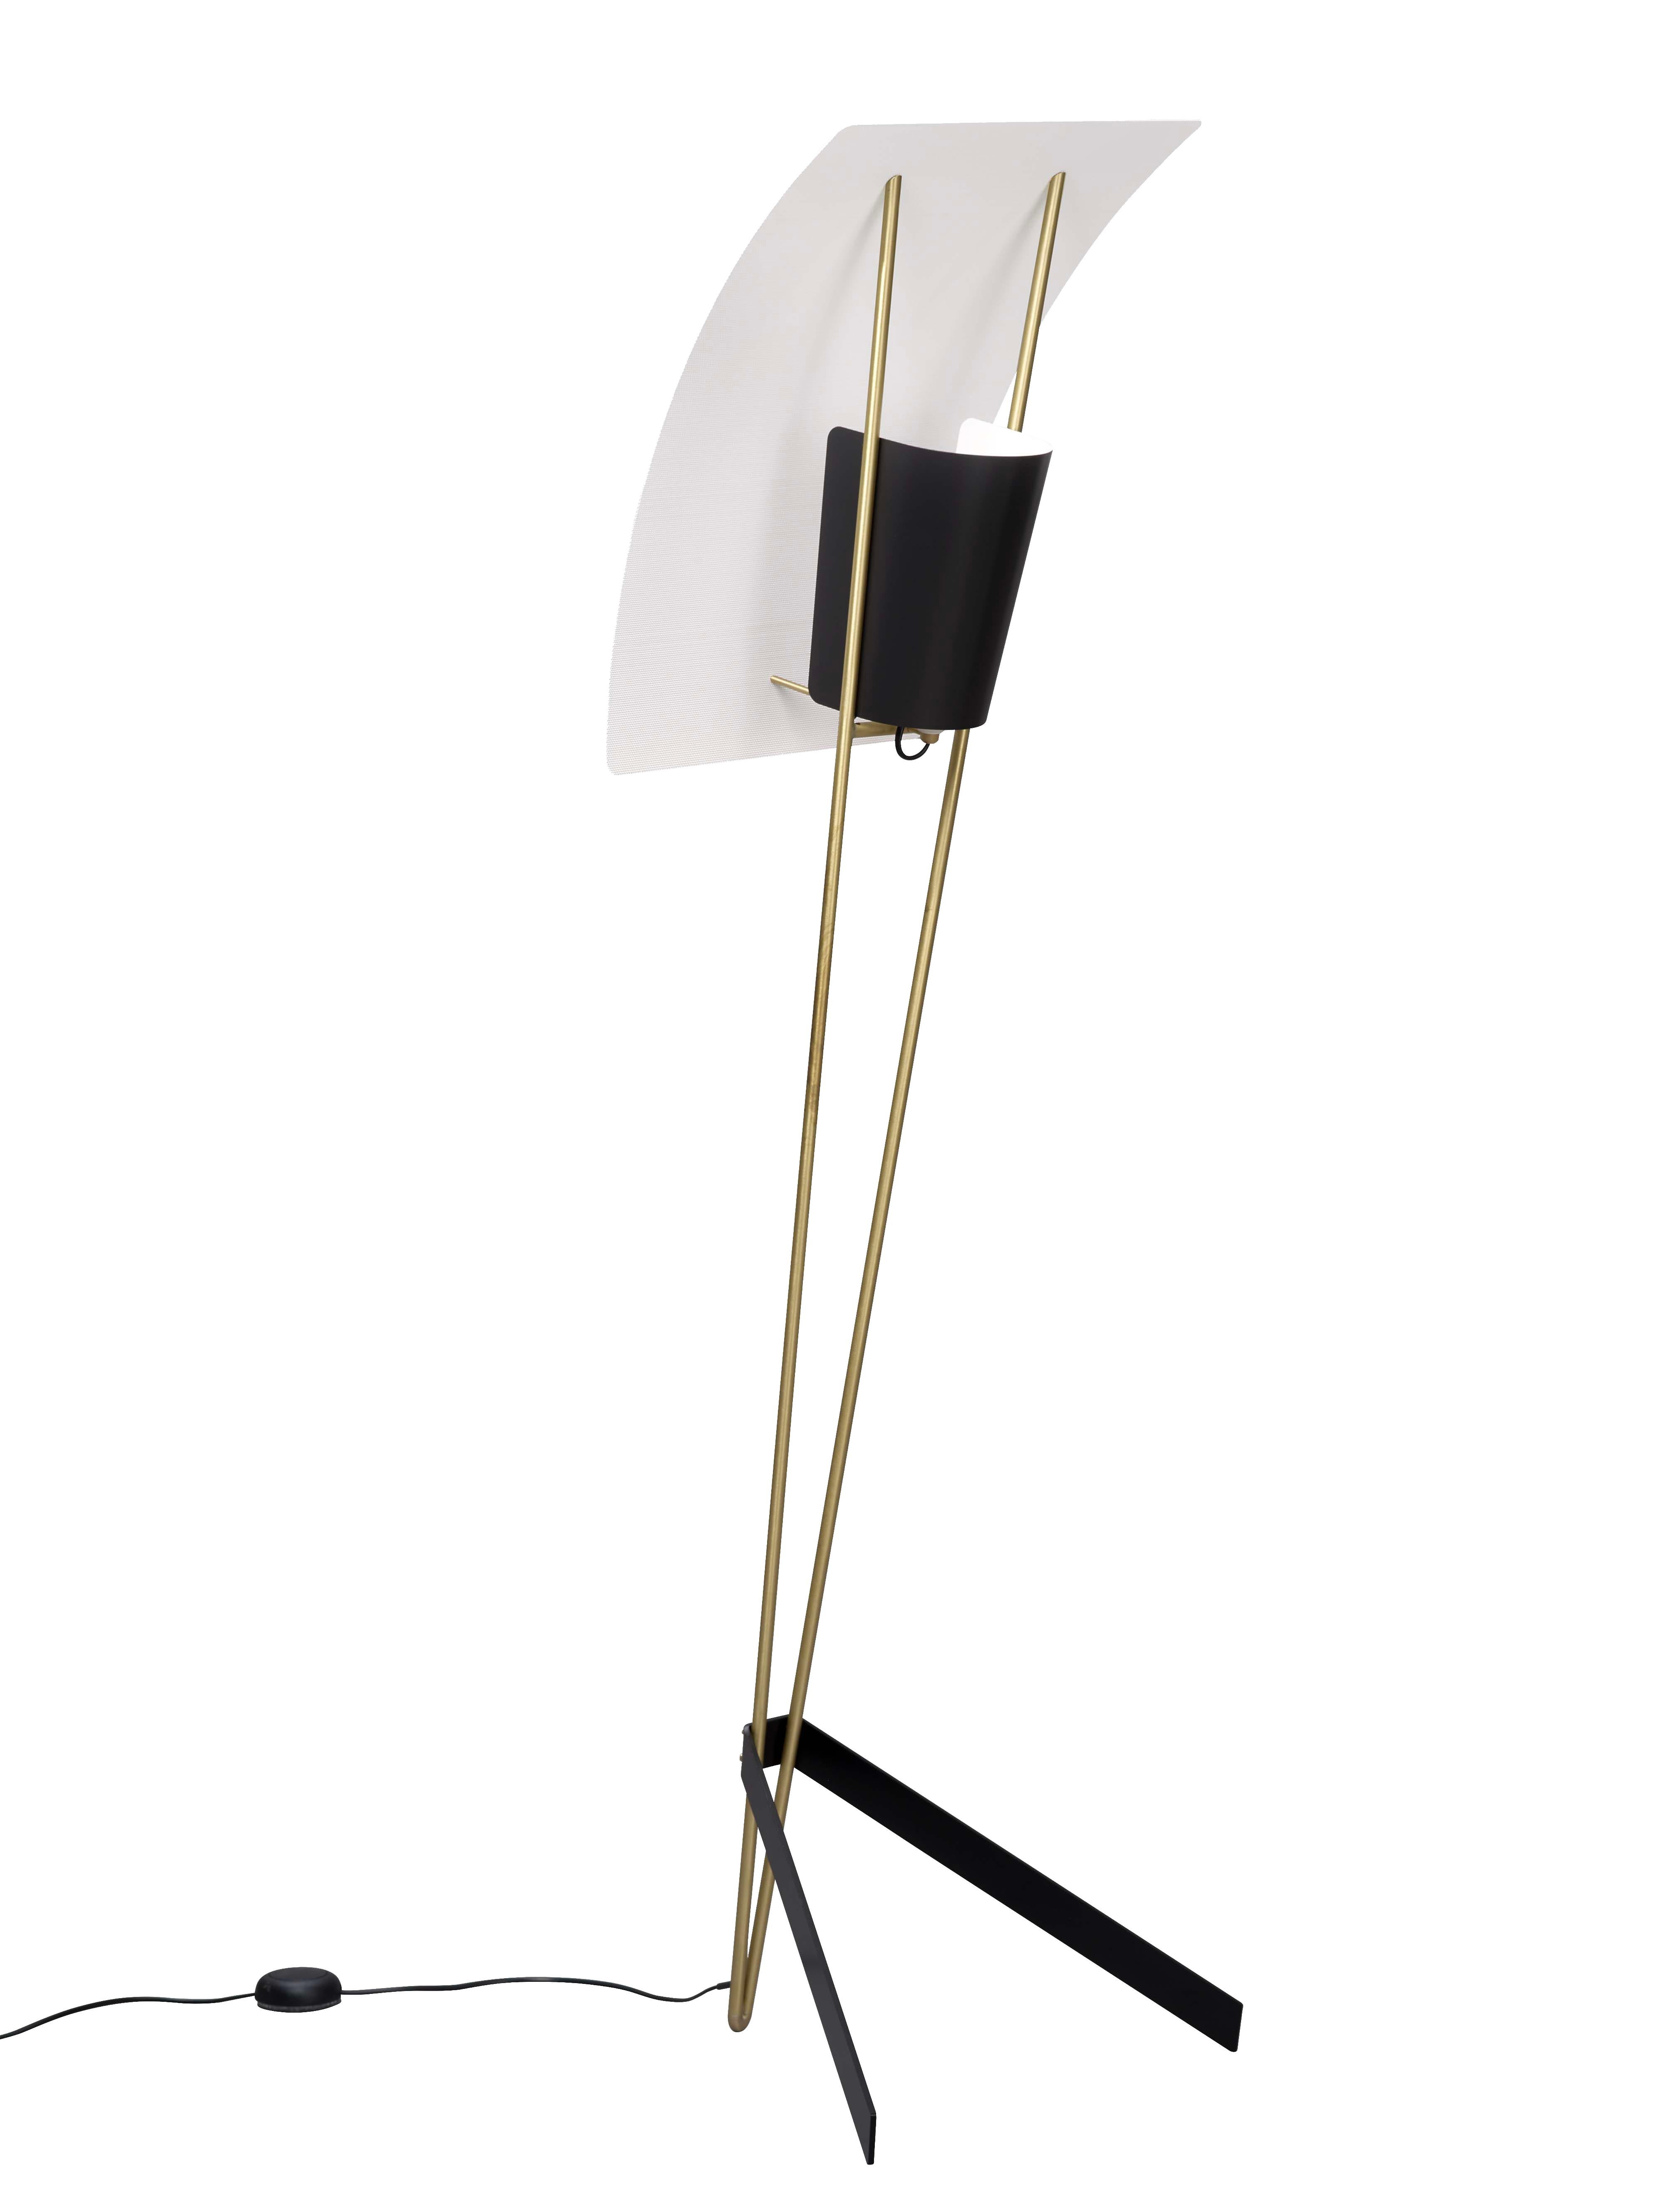 Metal Pierre Guariche Kite Floor Lamp in Black and White for Sammode Studio For Sale